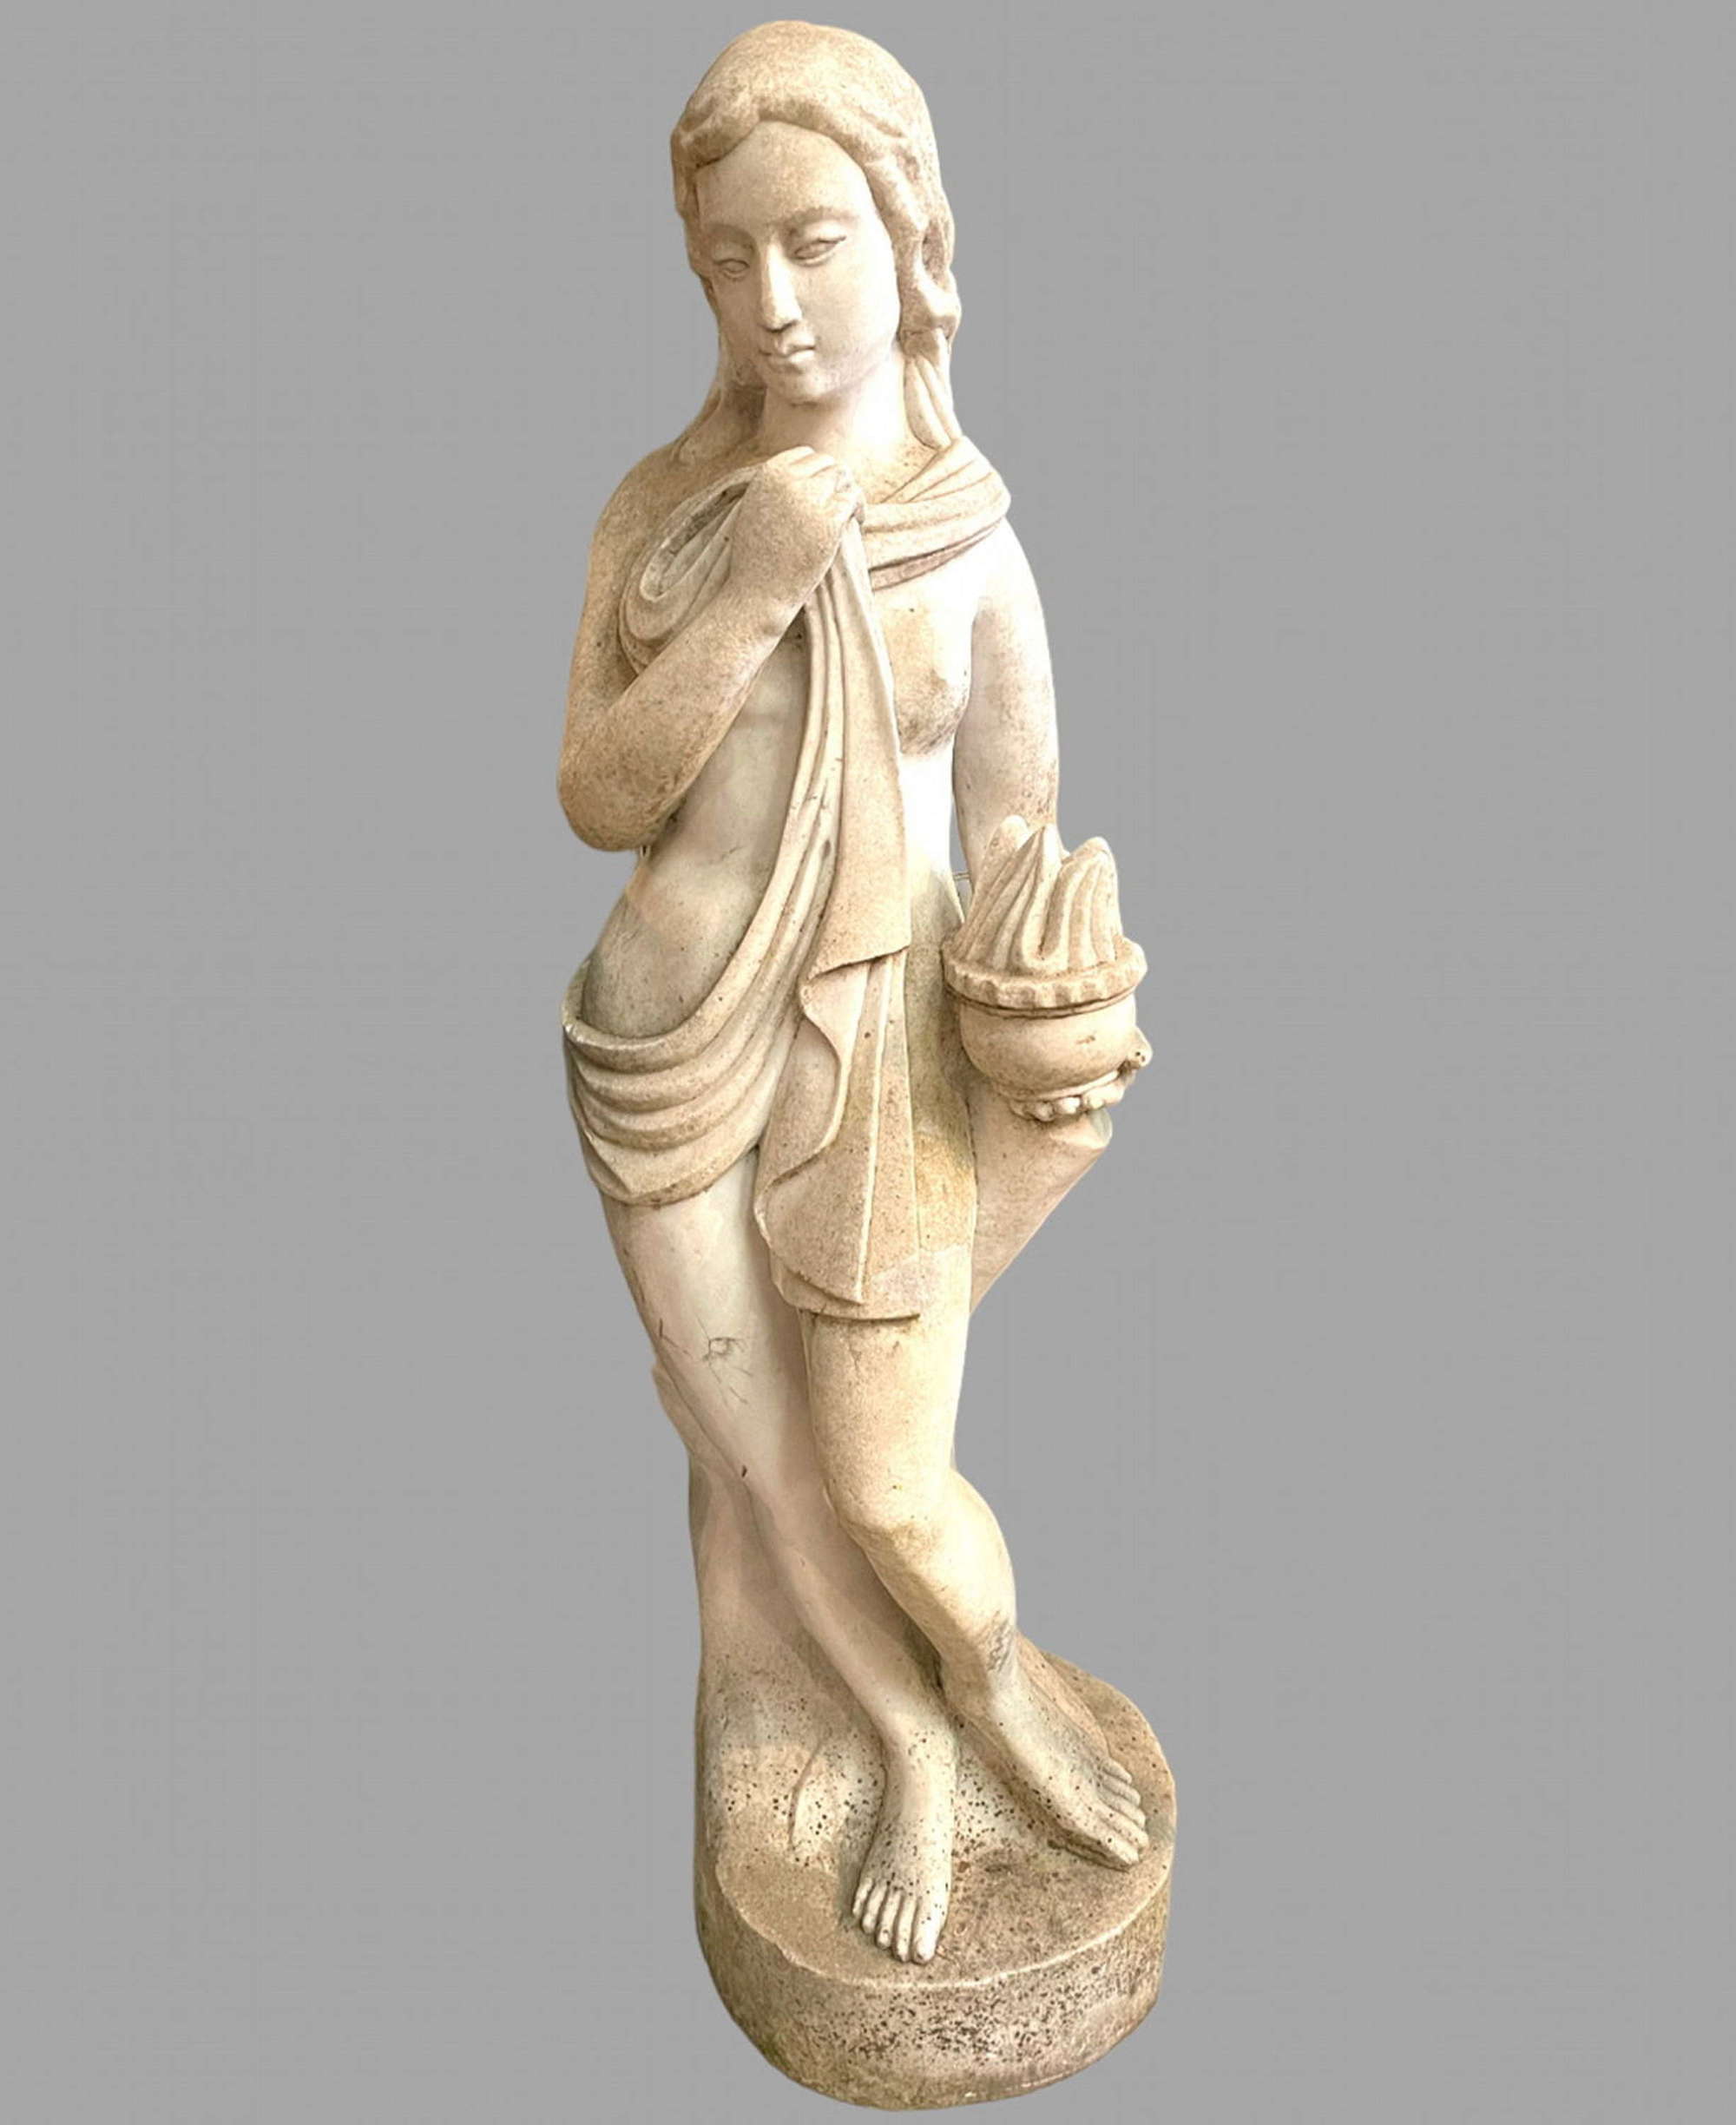 A 19th Century Sculpture of a Female